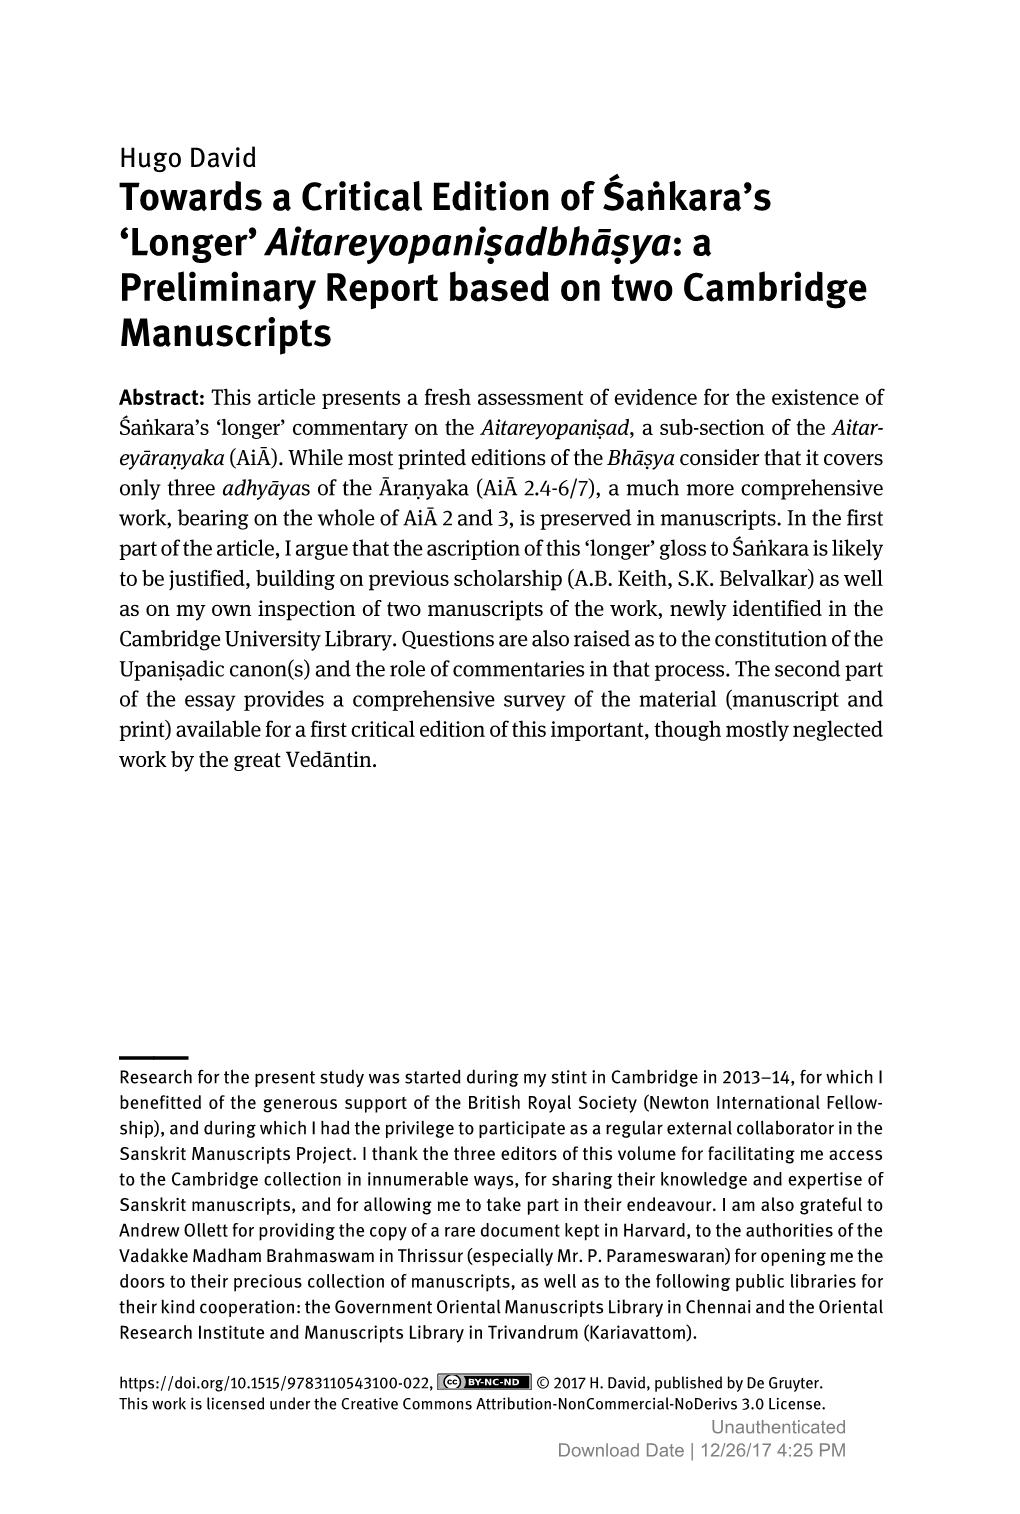 Towards a Critical Edition of Śaṅkara's 'Longer' Aitareyopaniṣadbhāṣya: a Preliminary Report Based on Two Cambridg